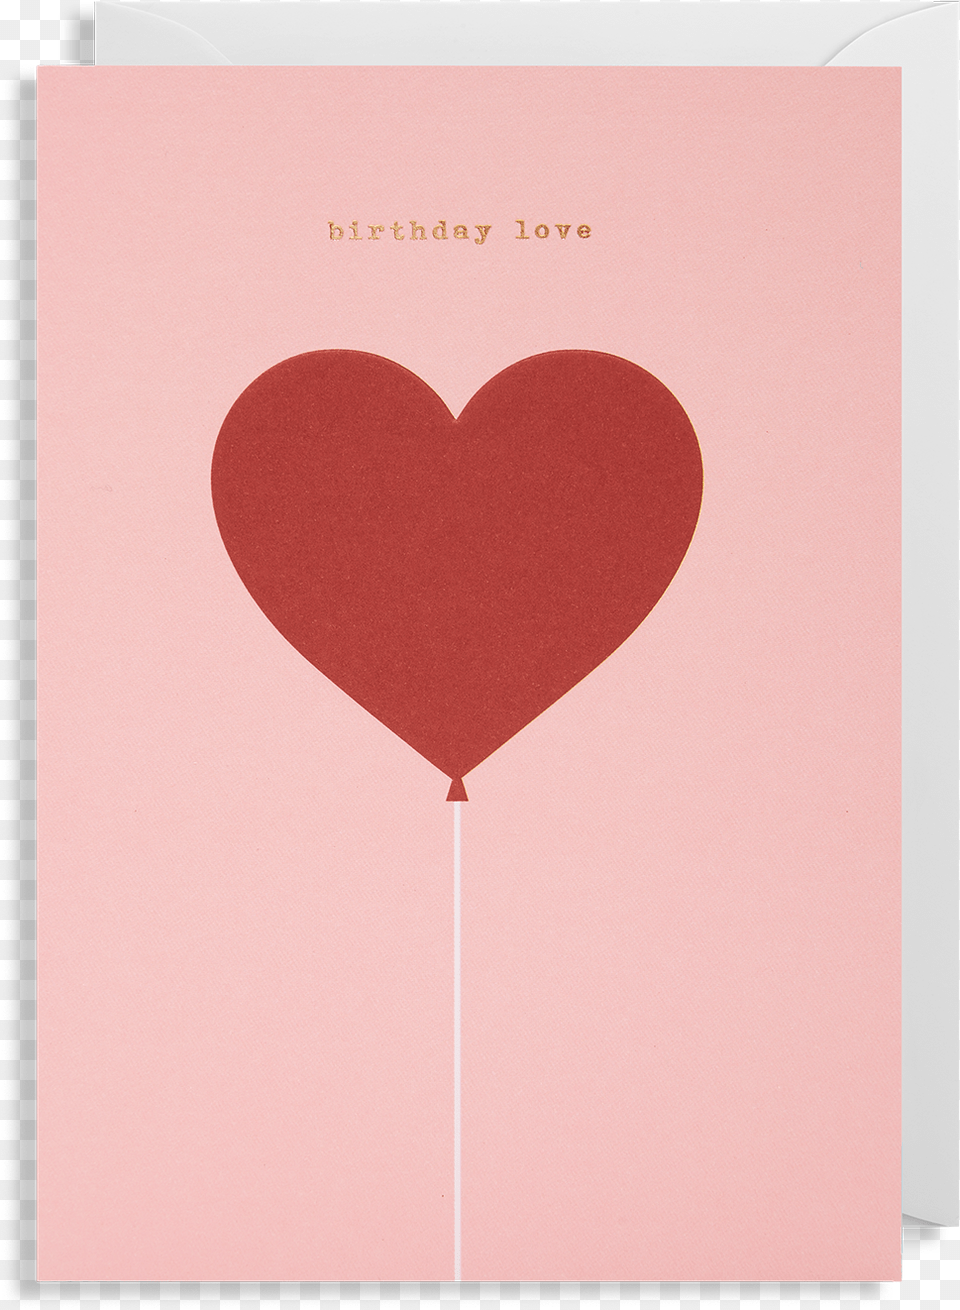 Birthday Love Greeting Card, Balloon, Heart Png Image